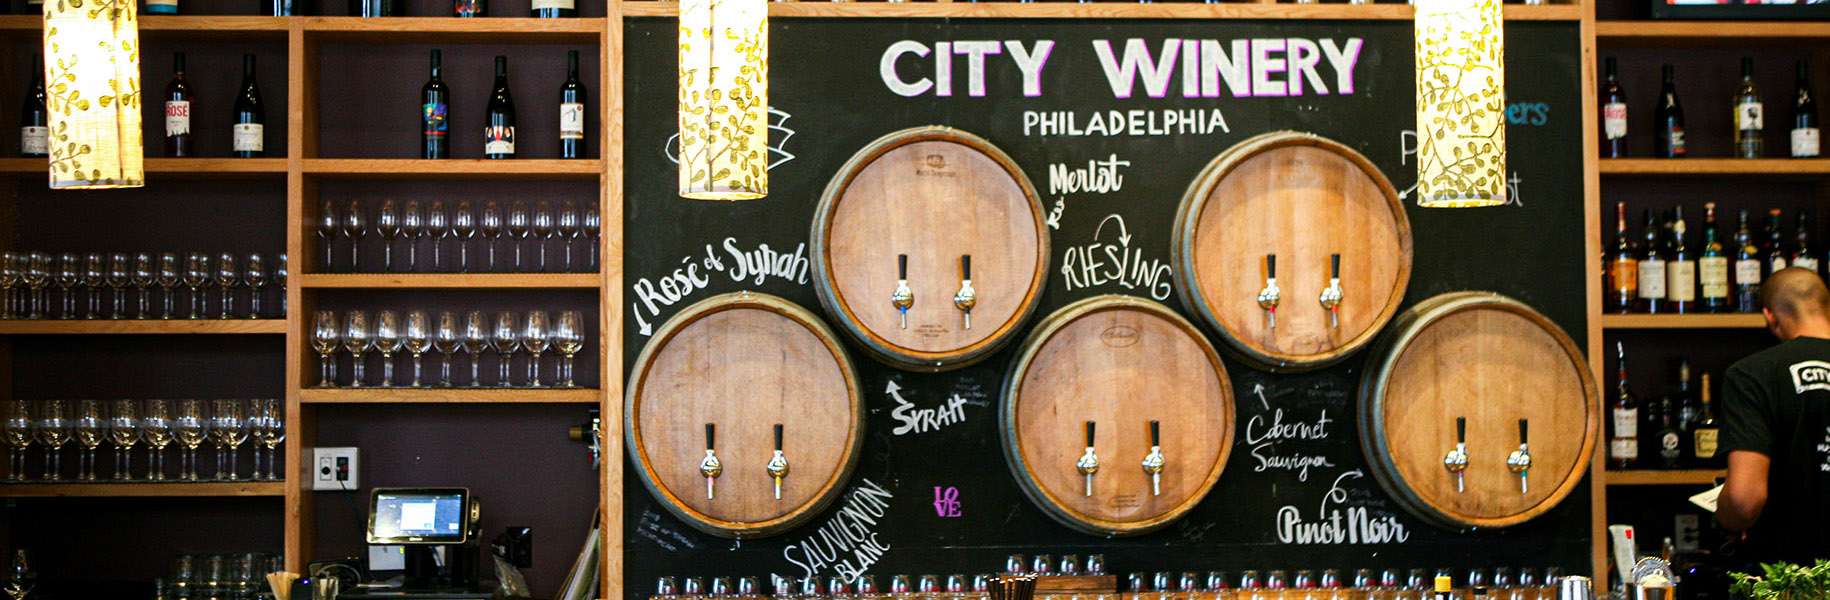 city winery barrel room